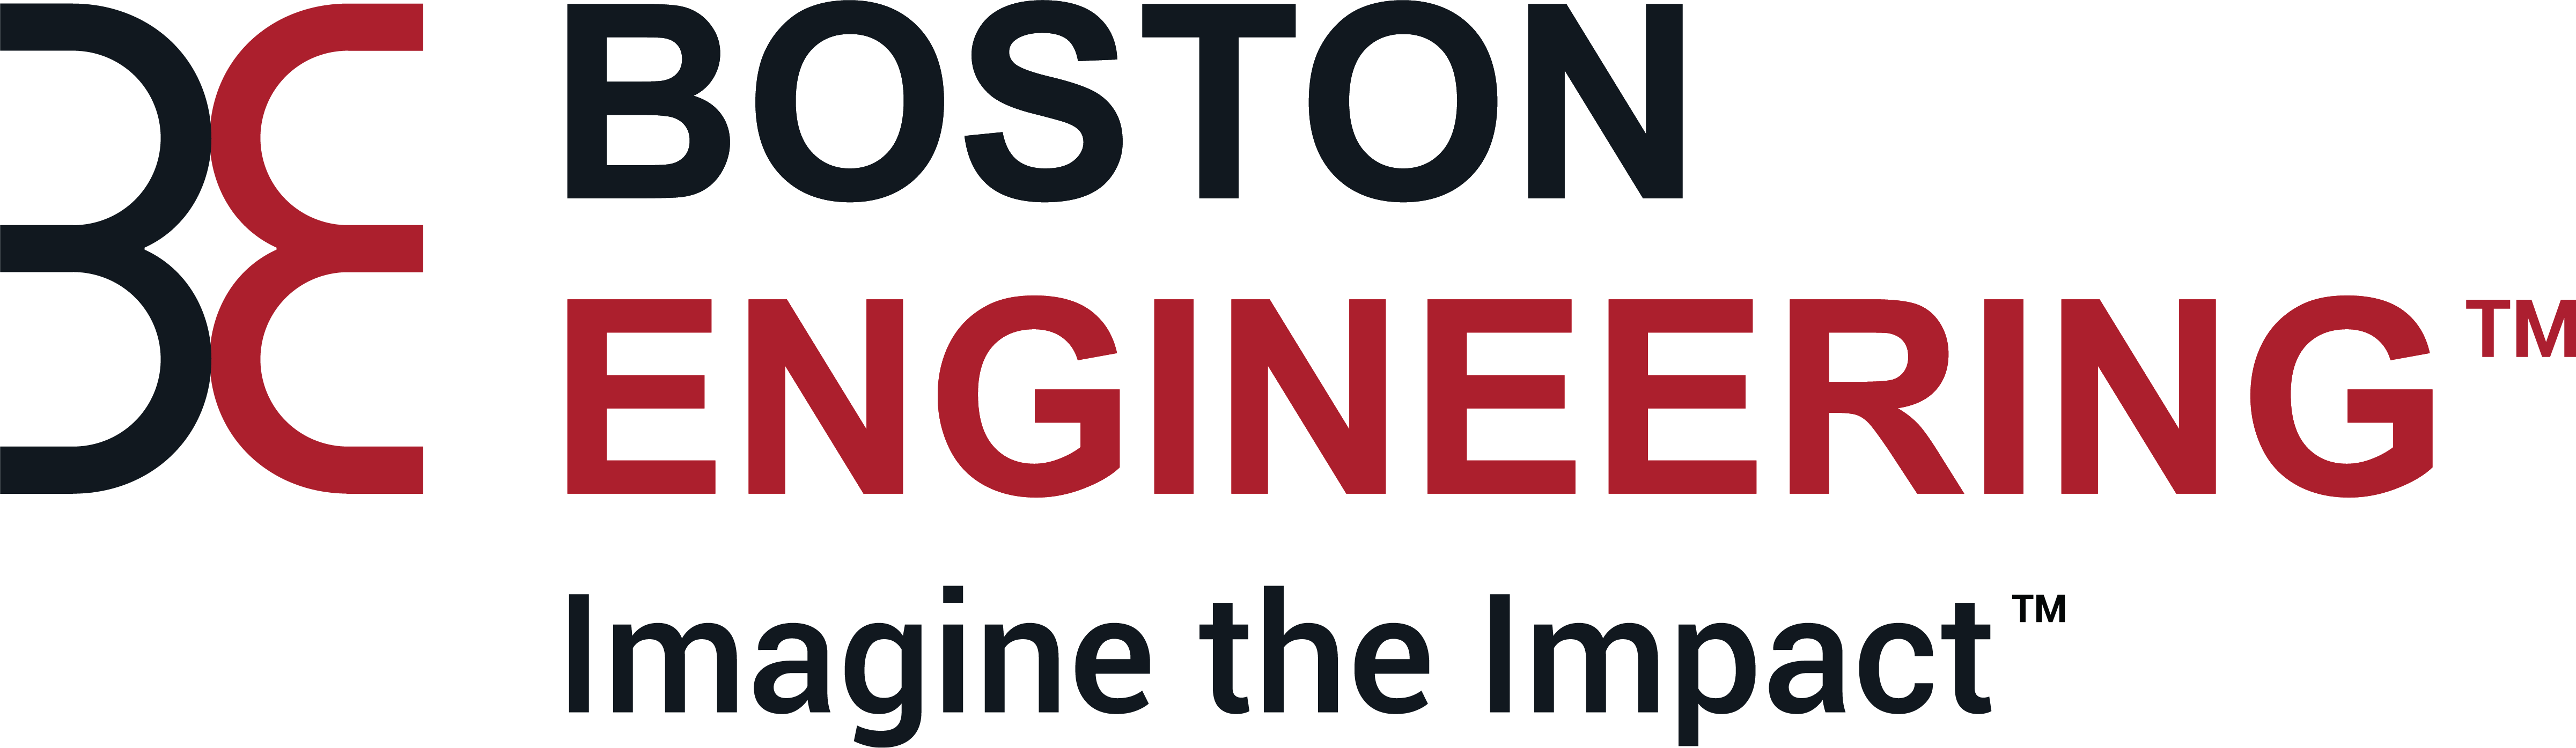 Boston Engineering-logo 03-2020